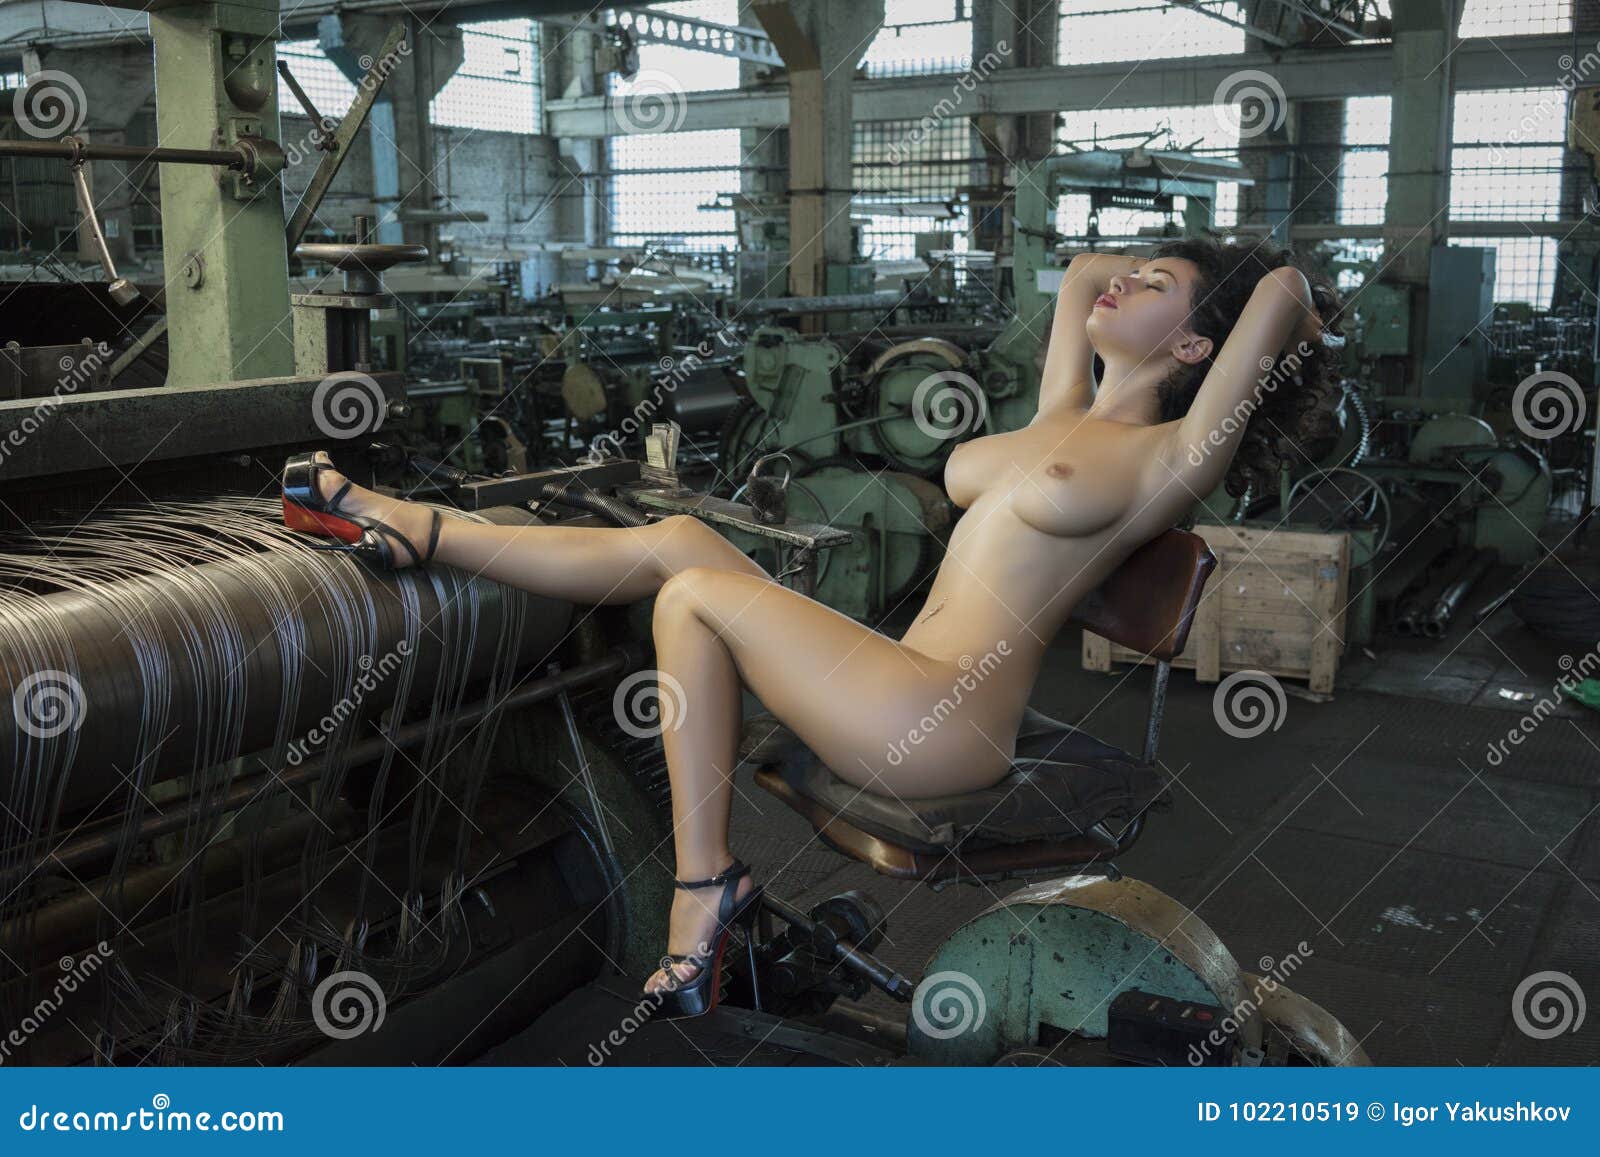 Nude In Factory